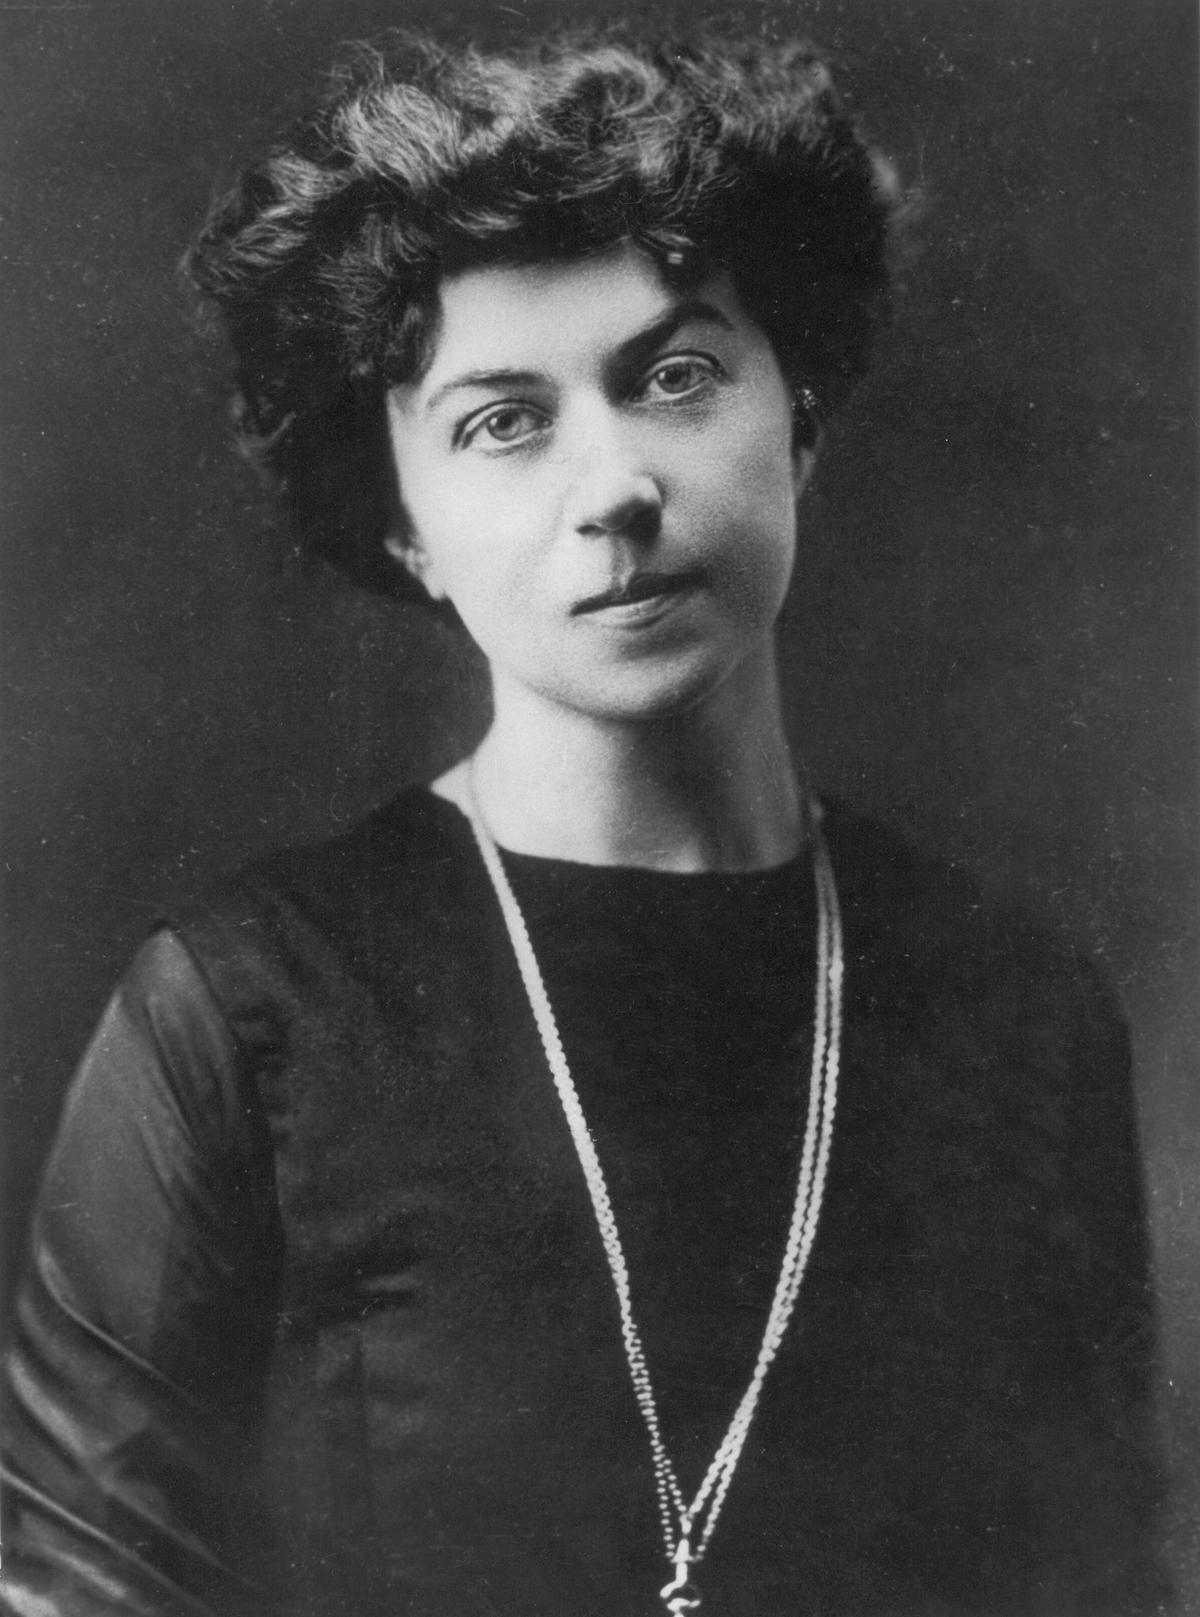 Alexandra Kollontai was People's Commissar for Welfare in Vladimir Lenin's government in 1917-1918.